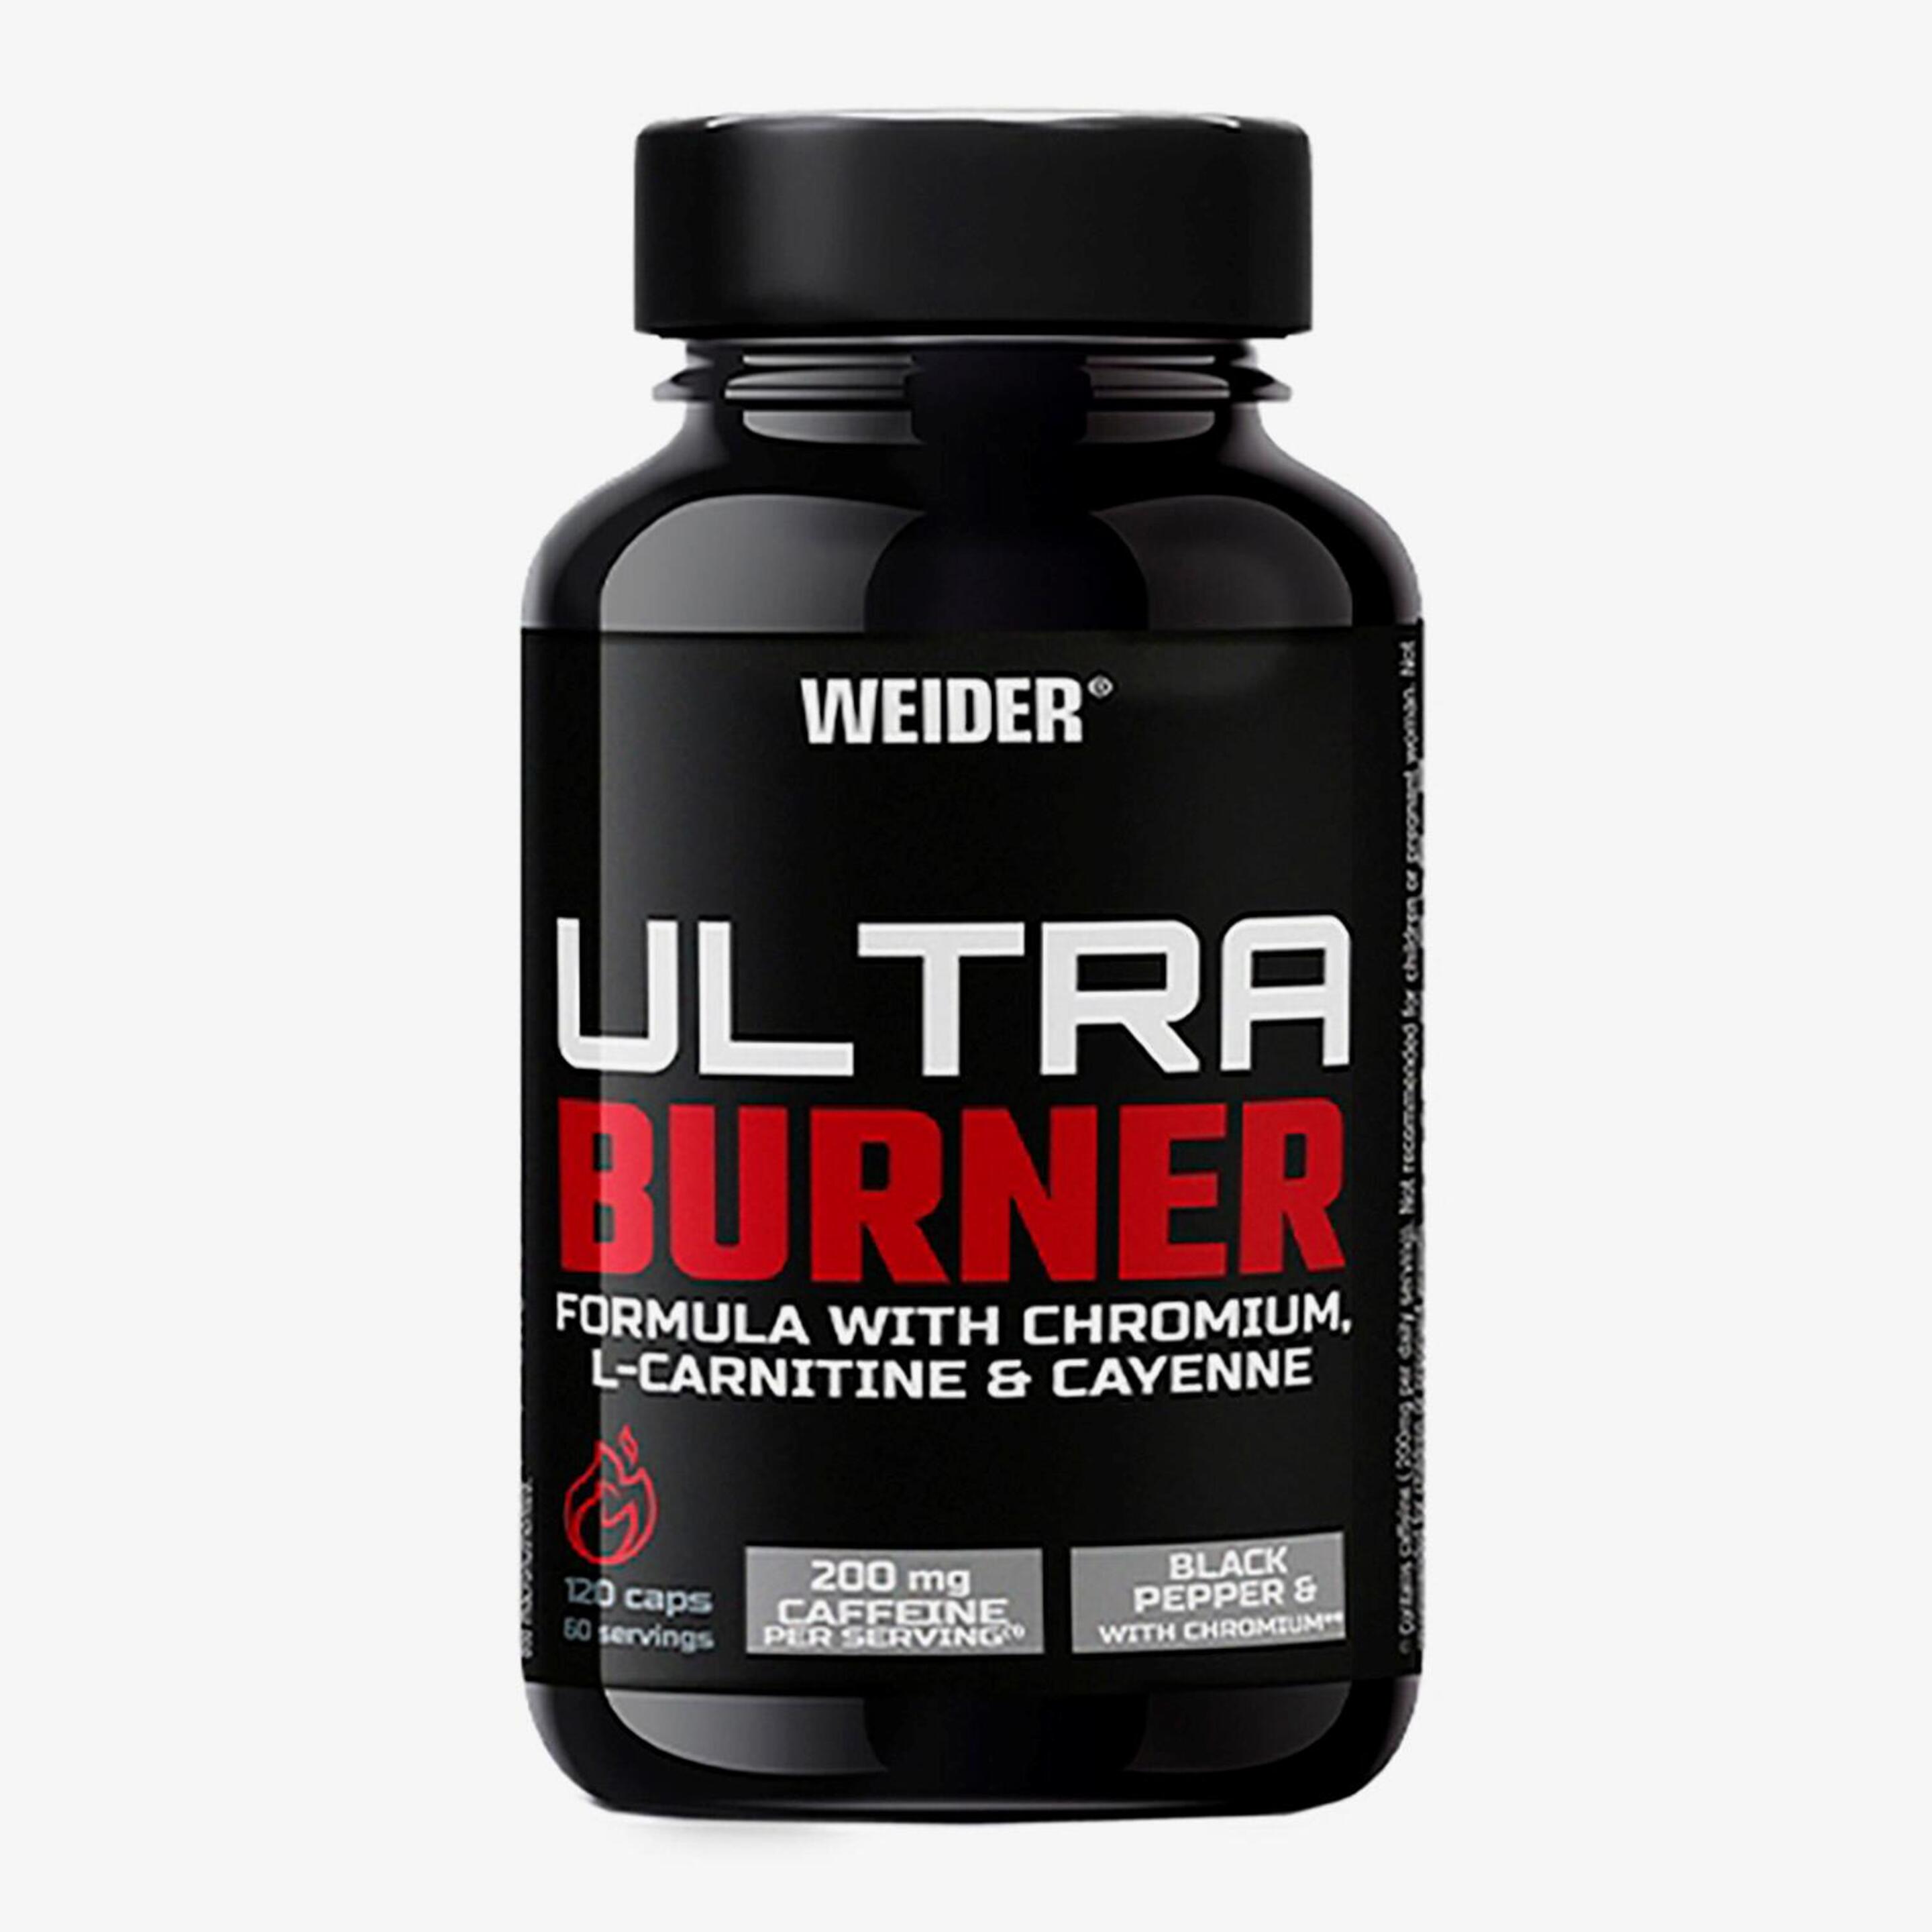 Weider Ultra Burner